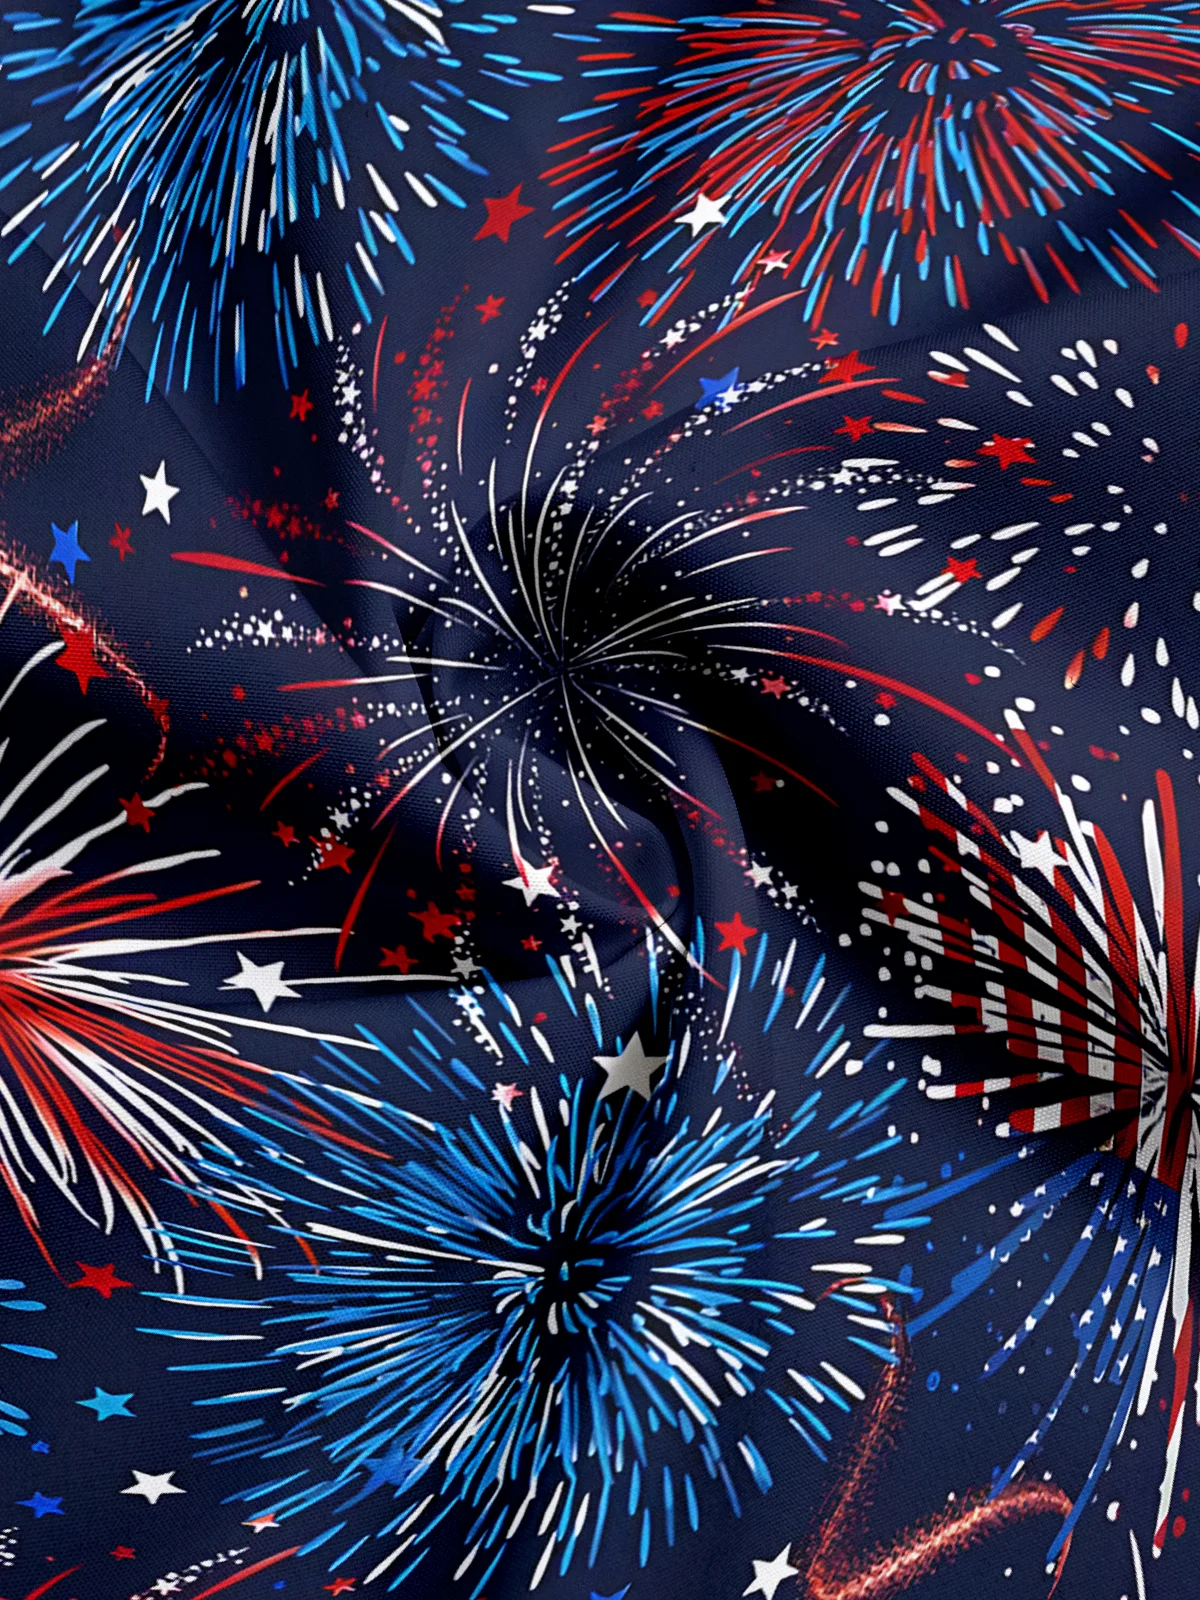 Moisture Wicking Fireworks American Flag Short Sleeve Aloha Shirt